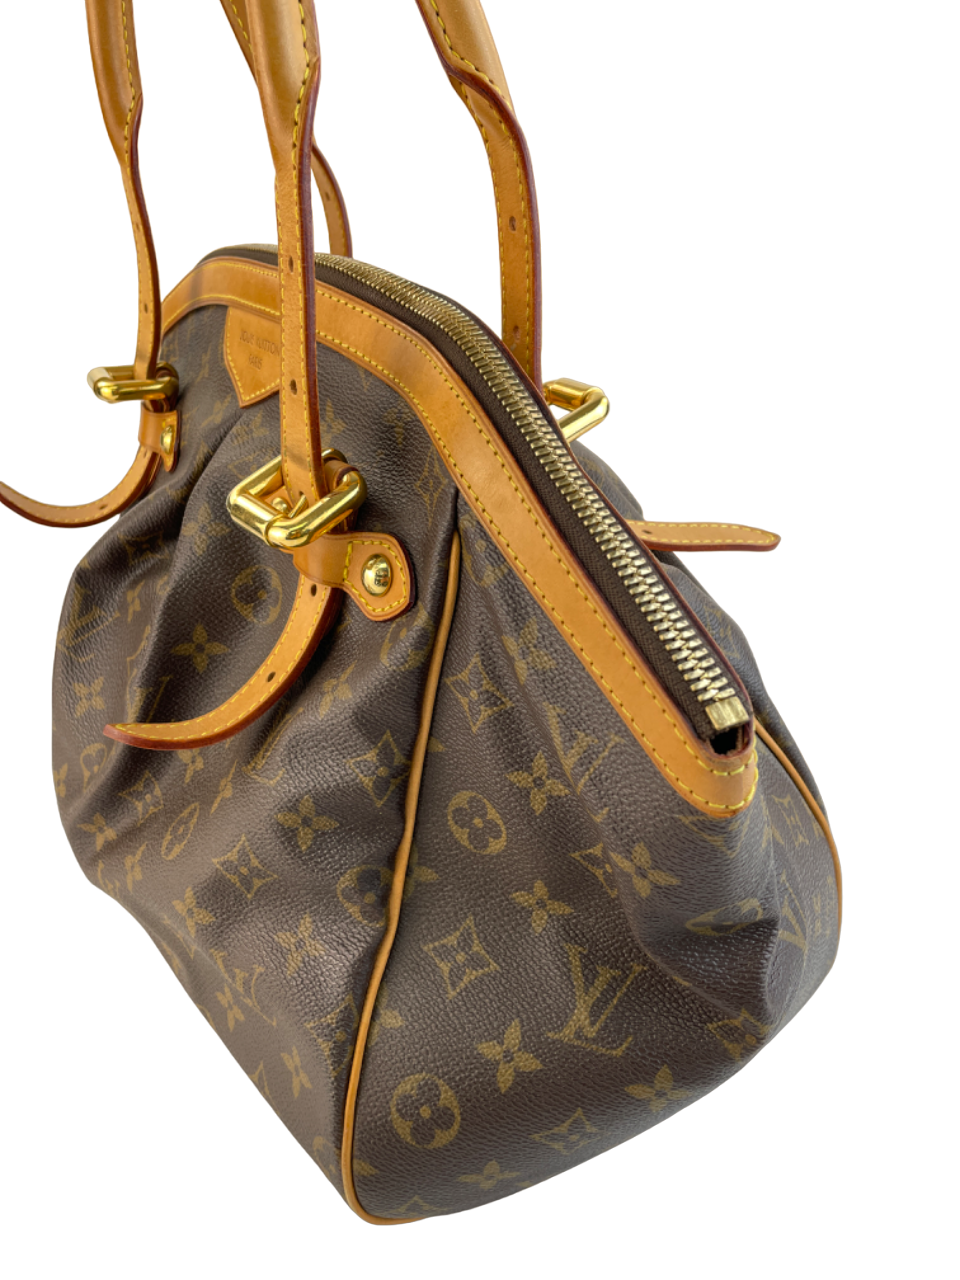 Louis Vuitton Tivoli Monogram GM Tote Shoulder Bag